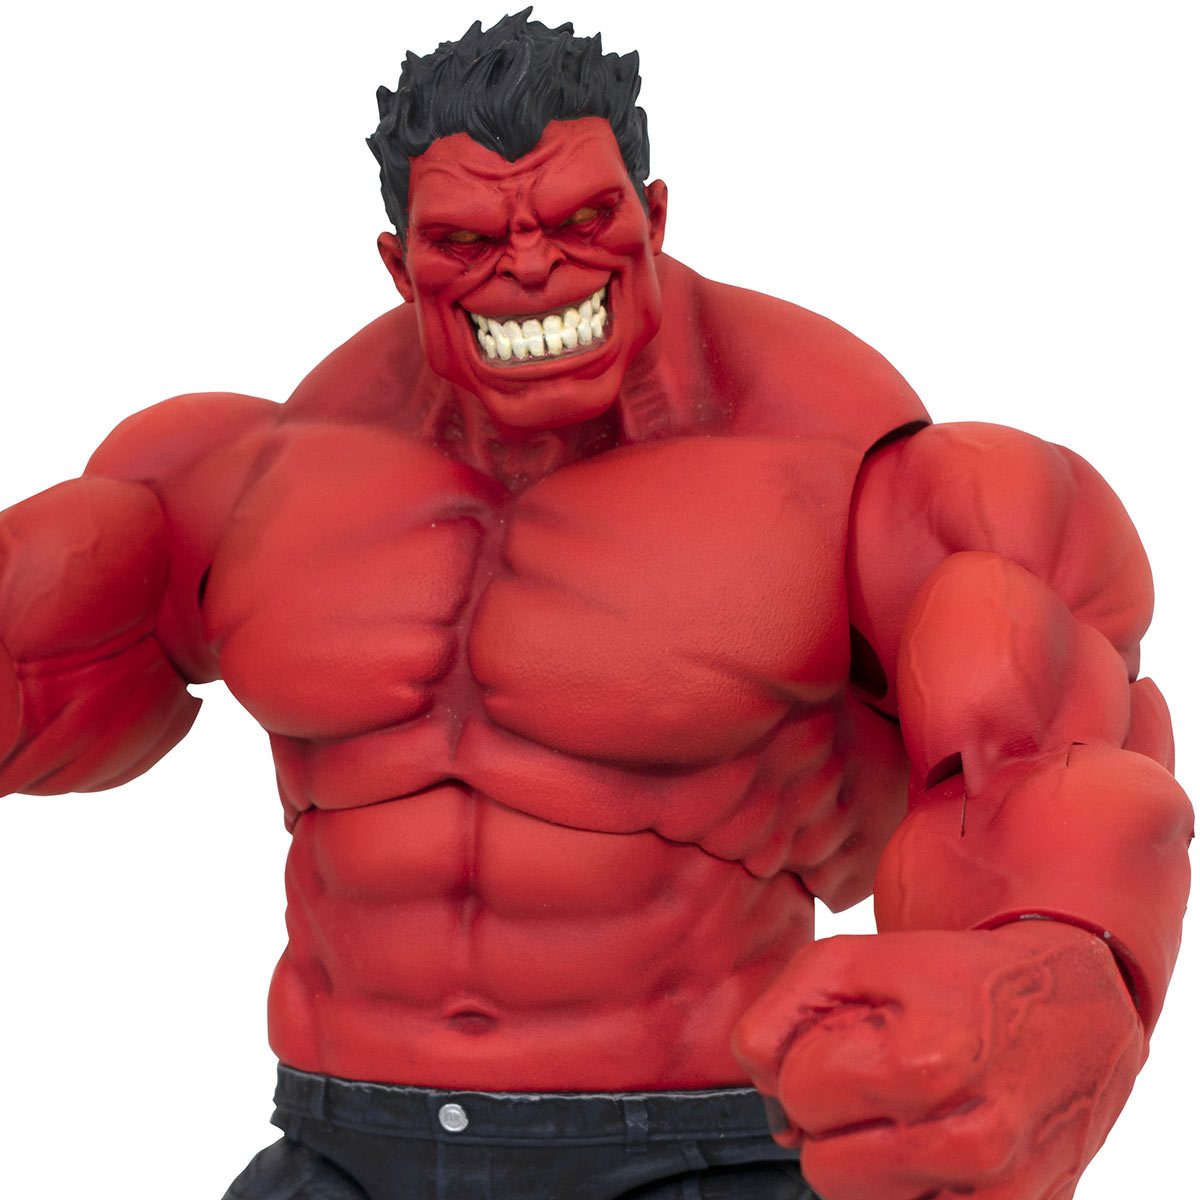 Red Hulk - Marvel Select